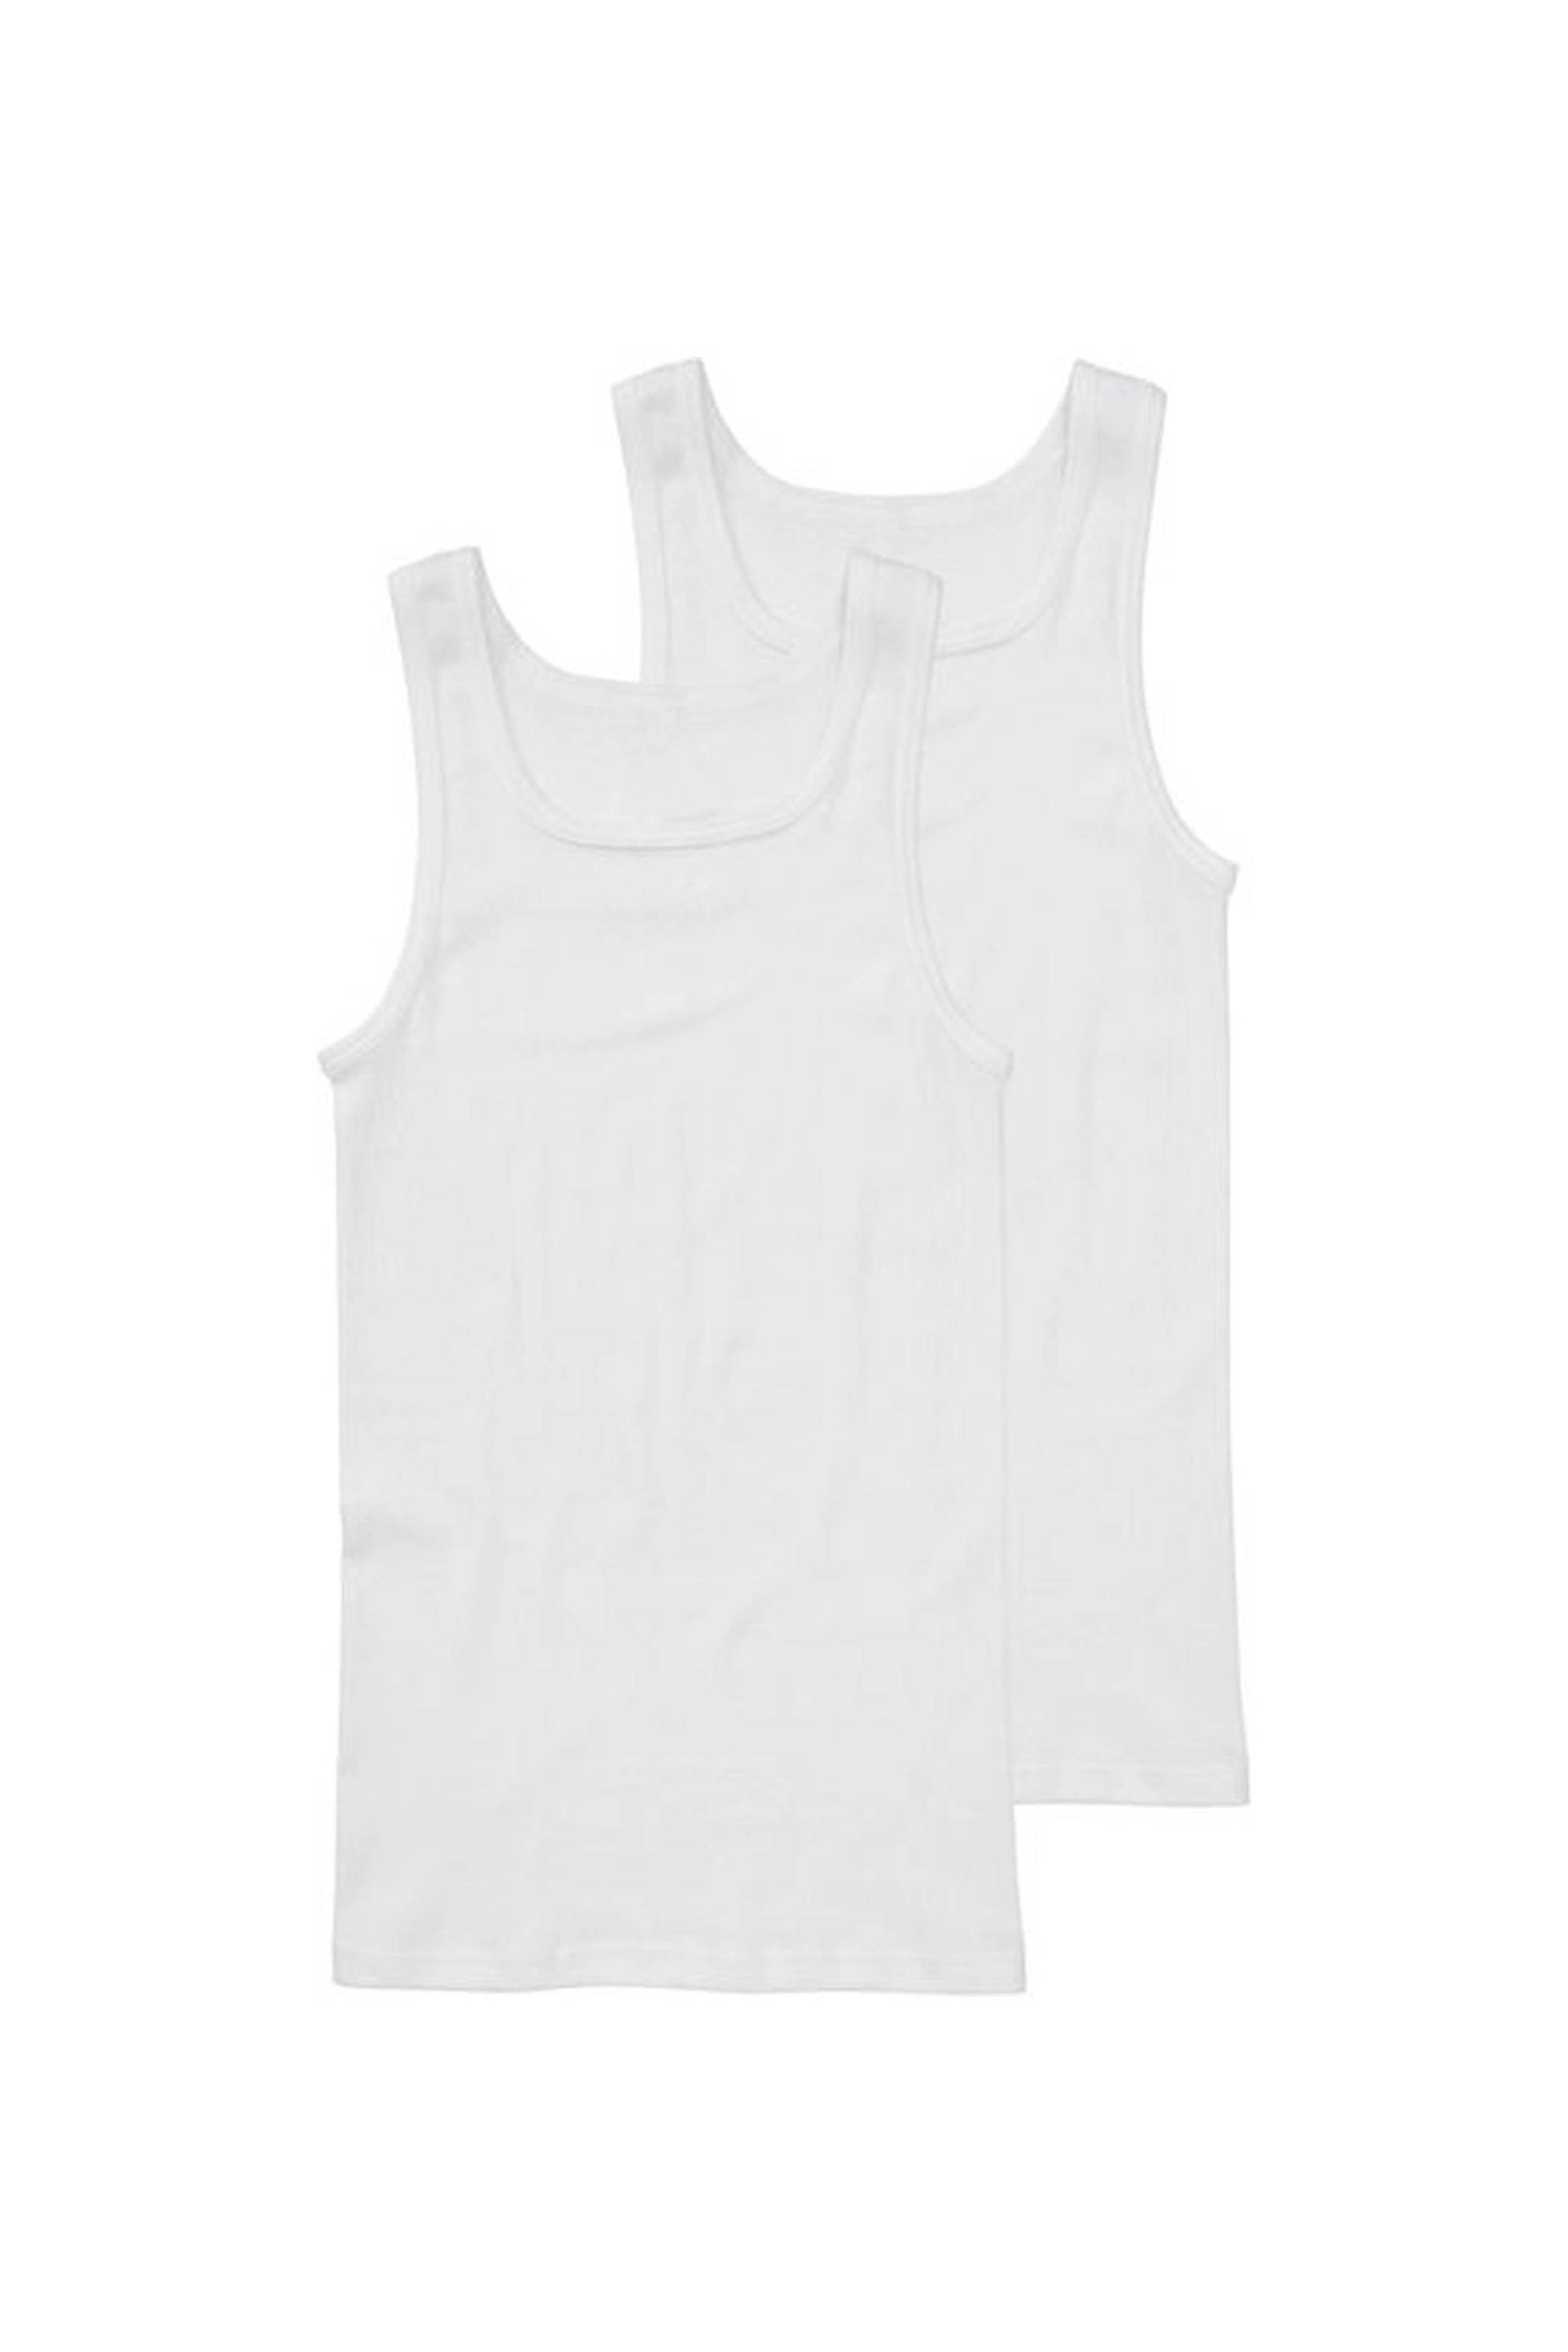 Bemiddelen vreugde fossiel HEMA hemd (set van 2) wit | wehkamp